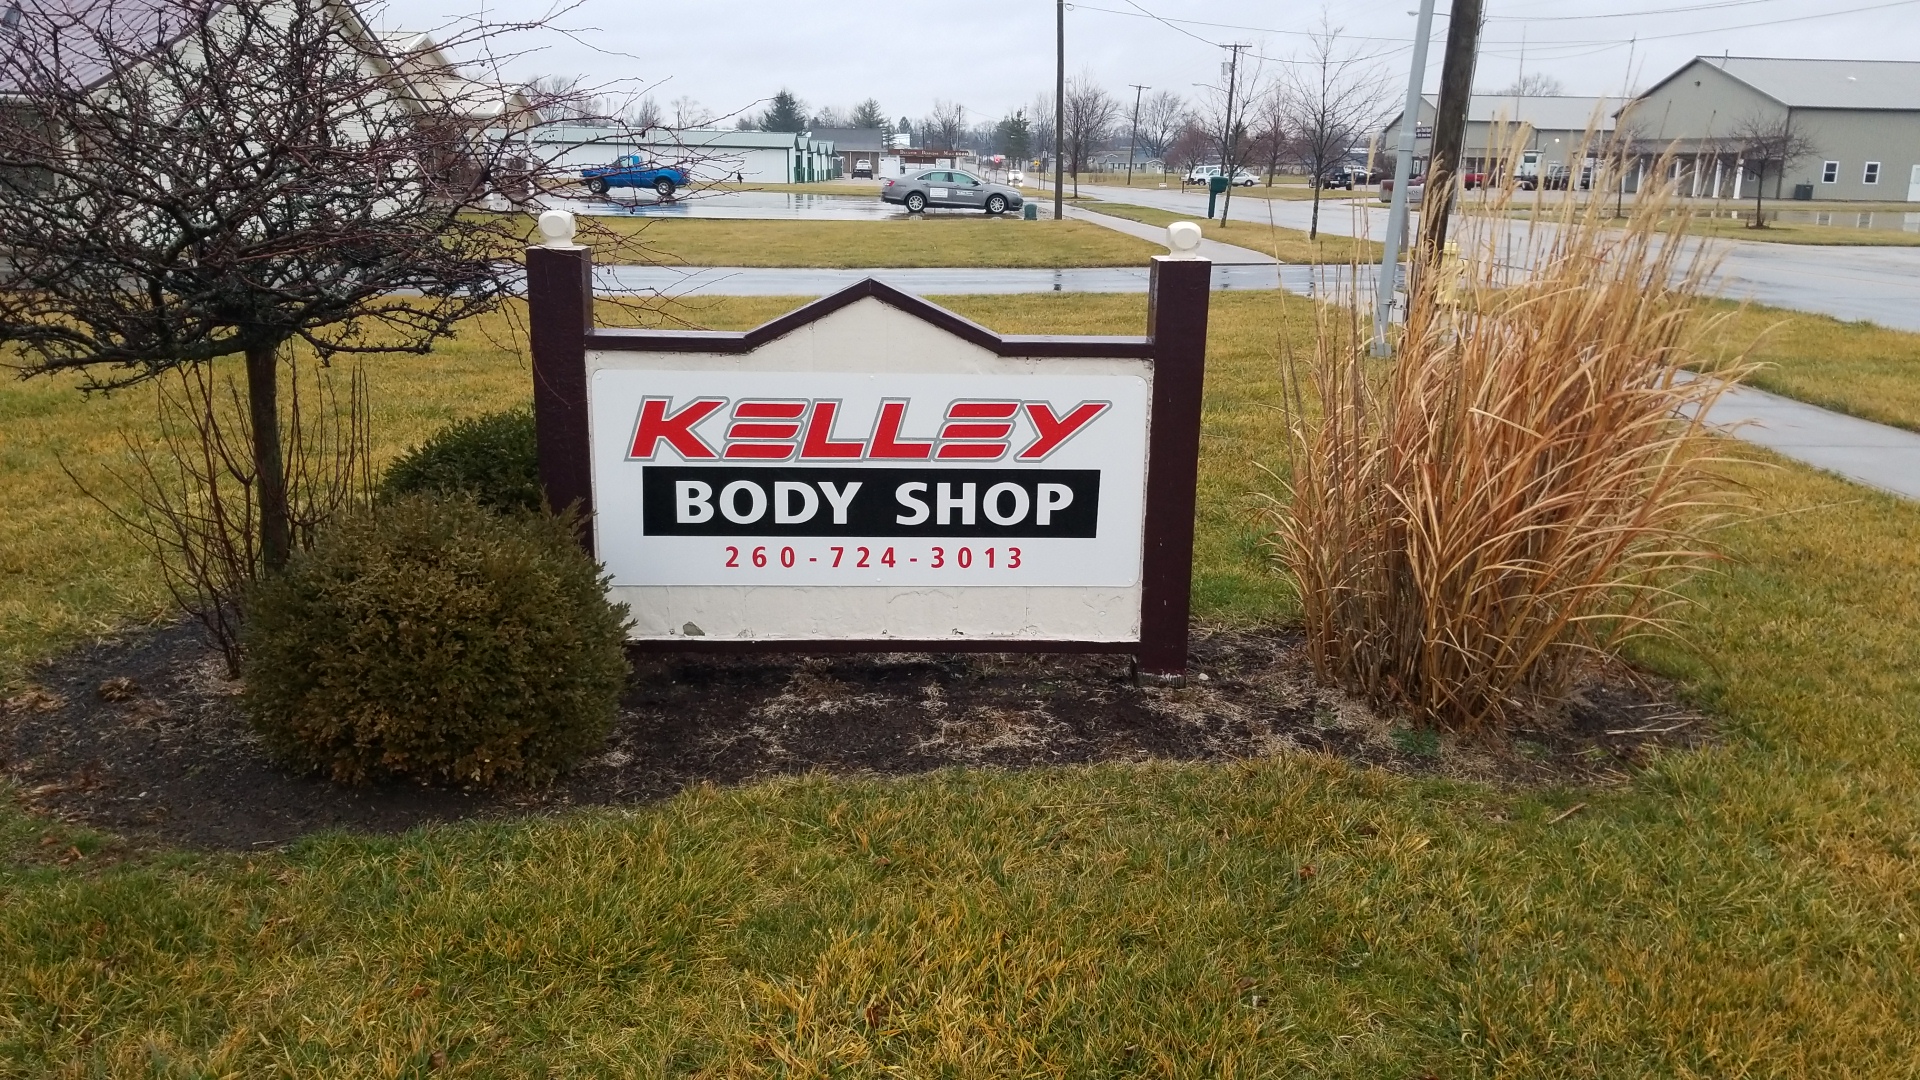 Kelley Body Shop